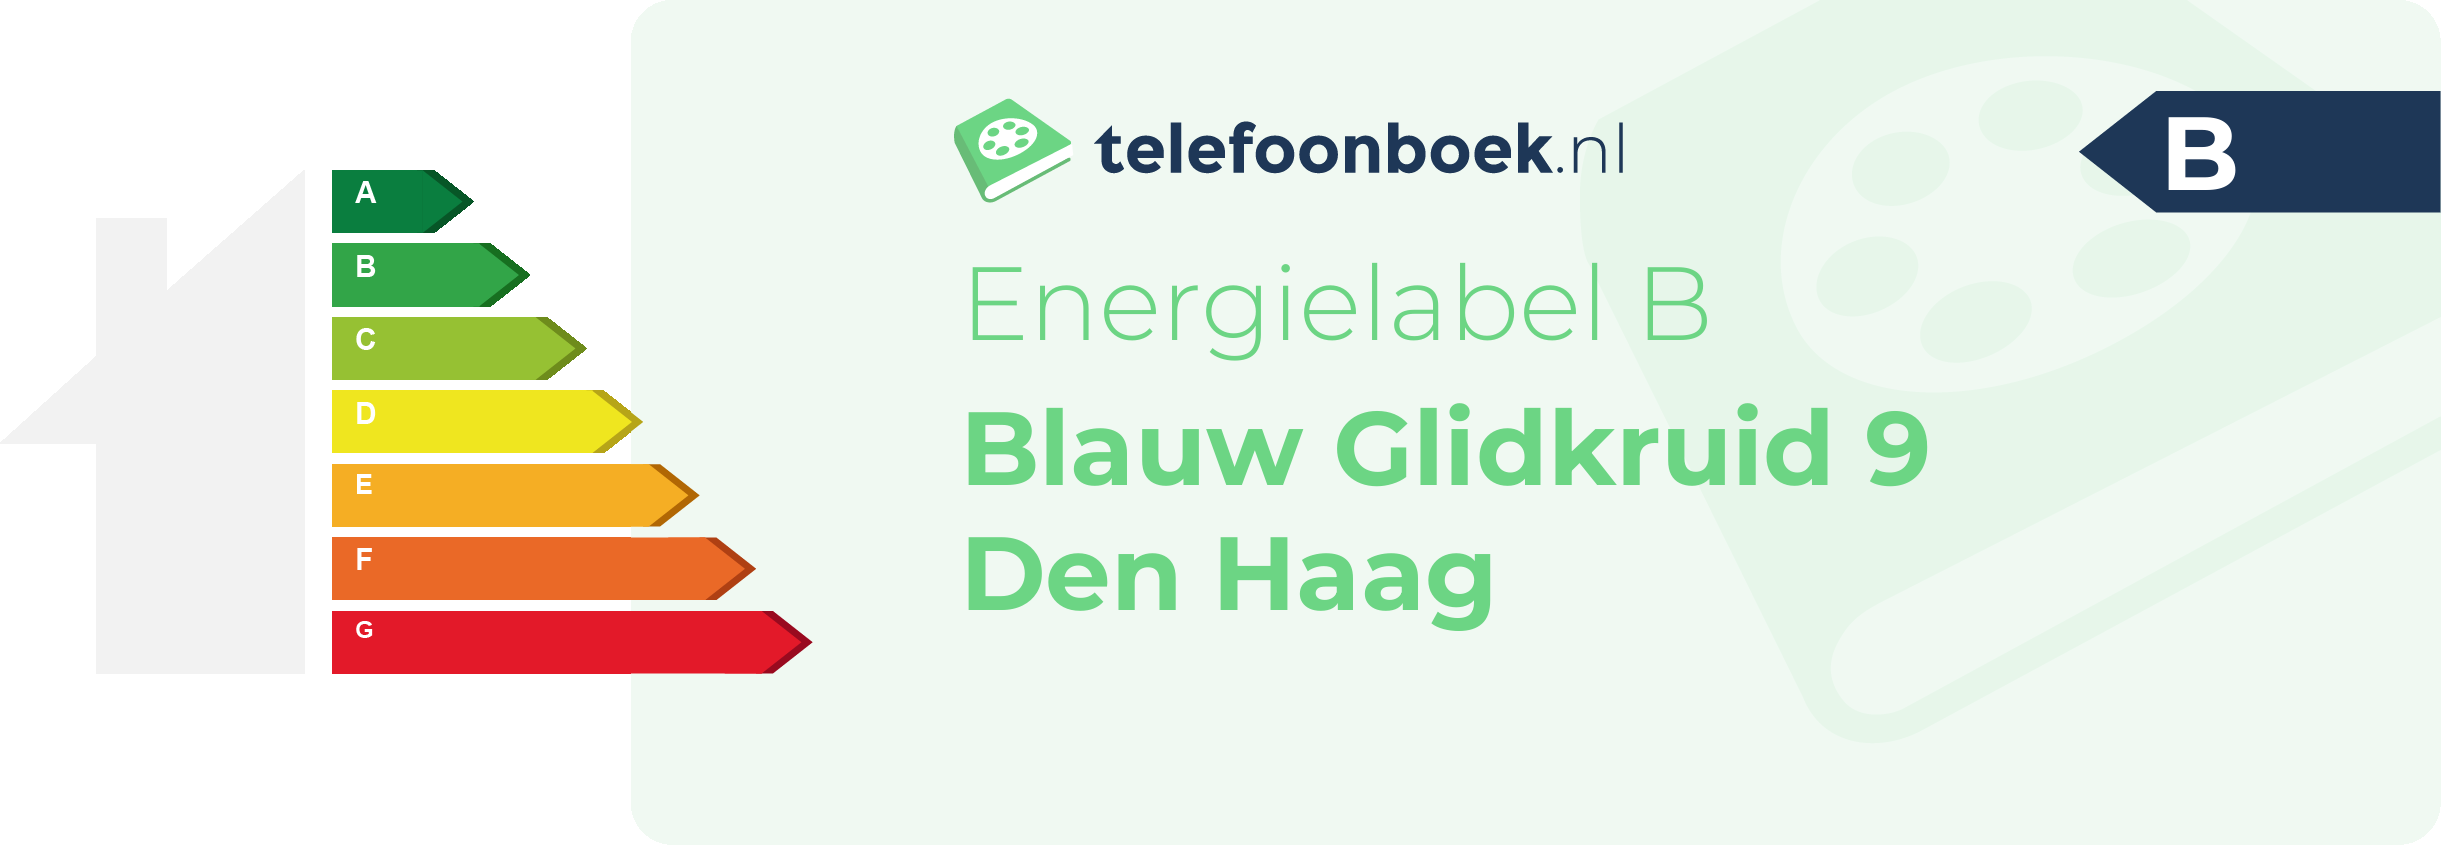 Energielabel Blauw Glidkruid 9 Den Haag